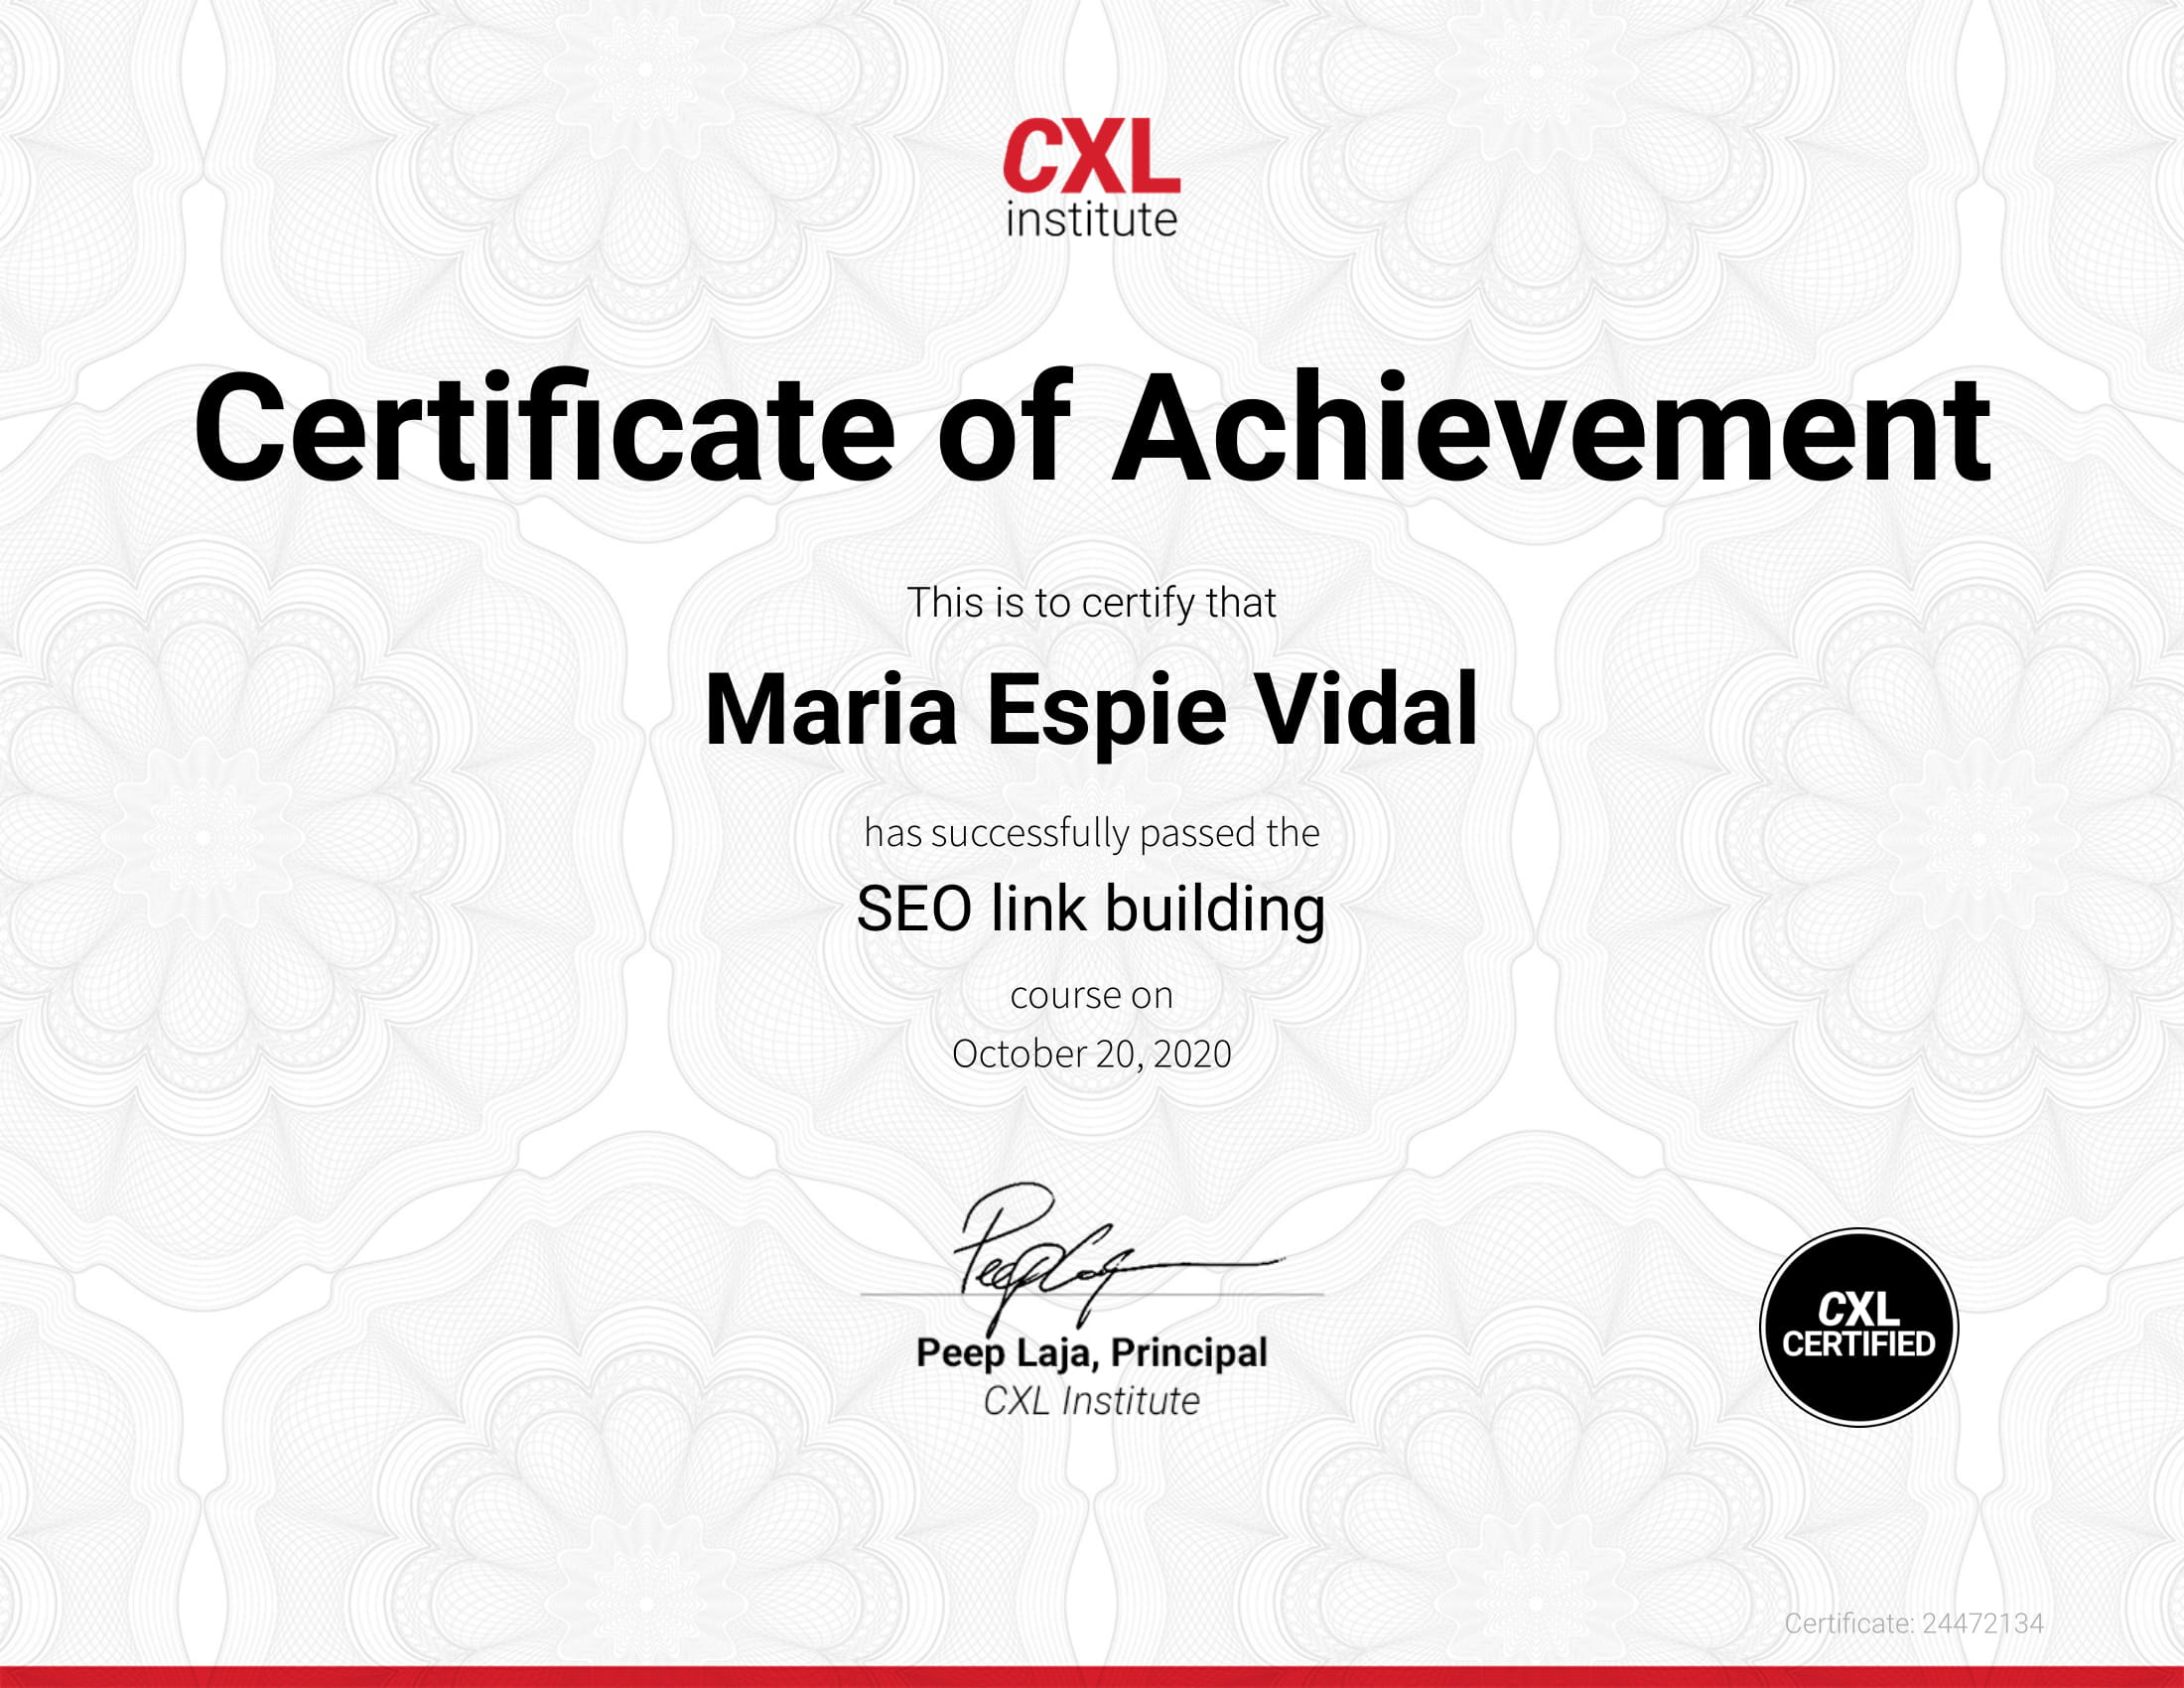 CXL Certification for SEO link building